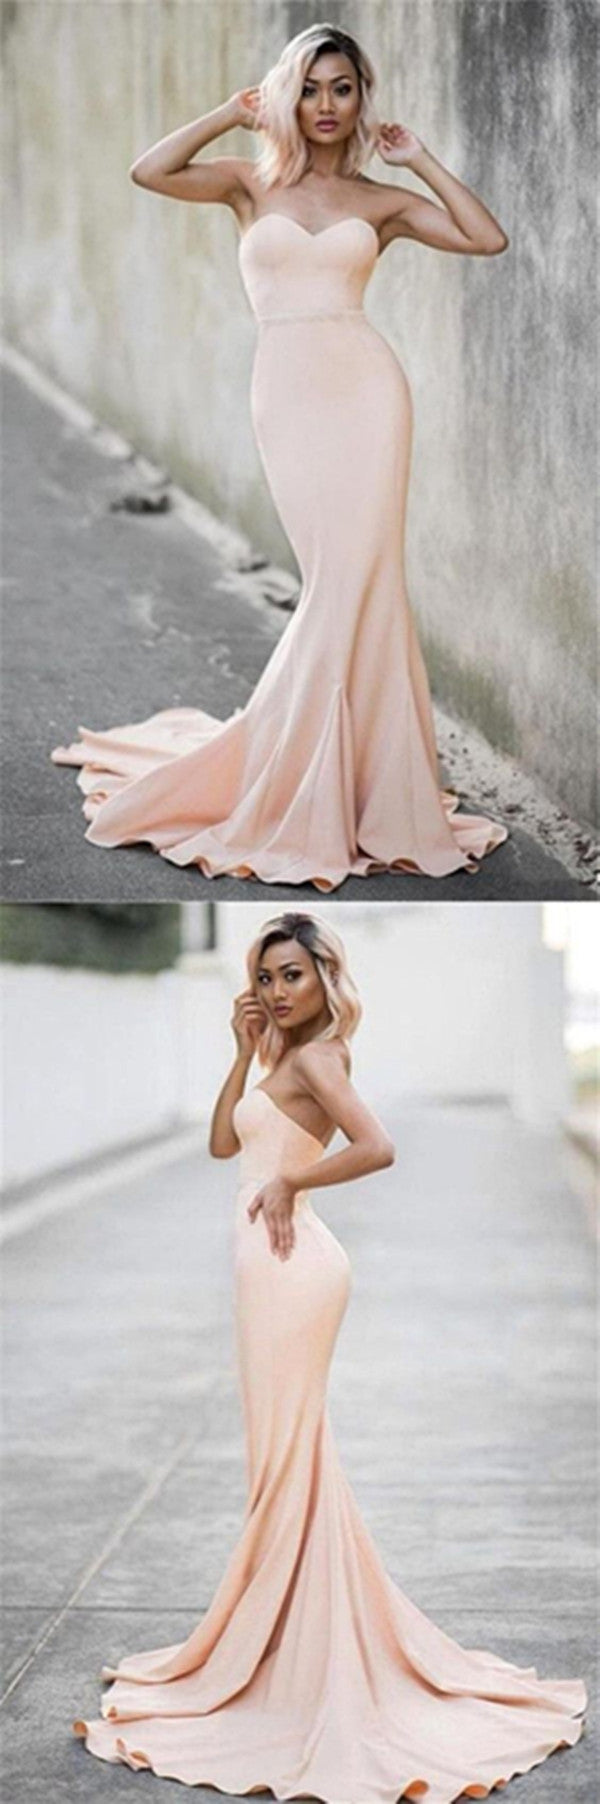 FDY Fabric Long Mermaid Elegant Prom Dress